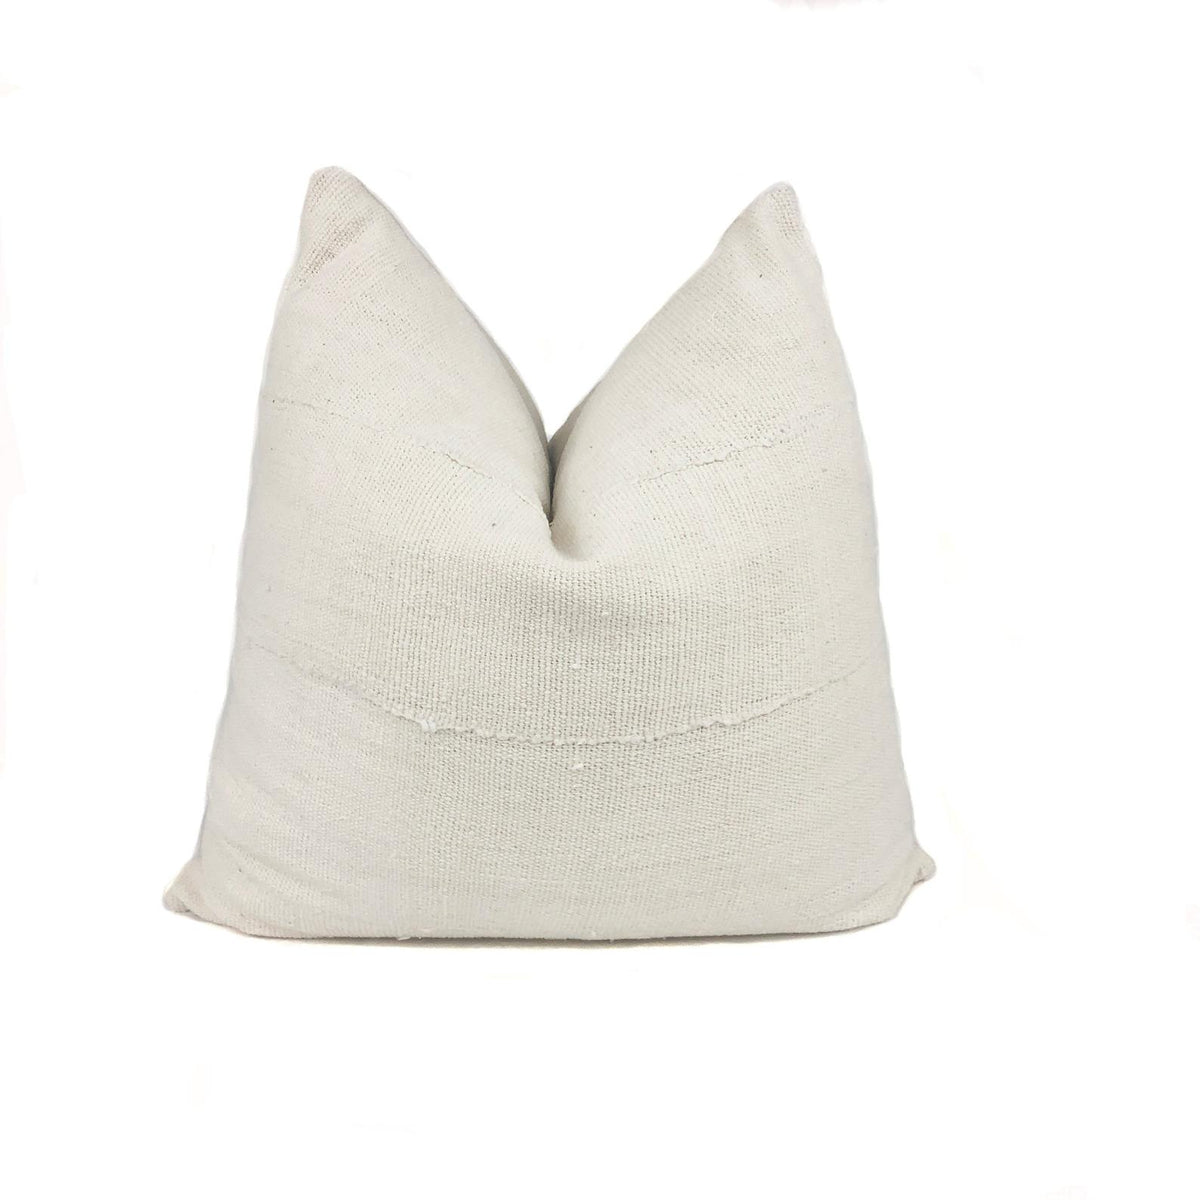 Pillow Combo # 22 | 3 Pillow Covers